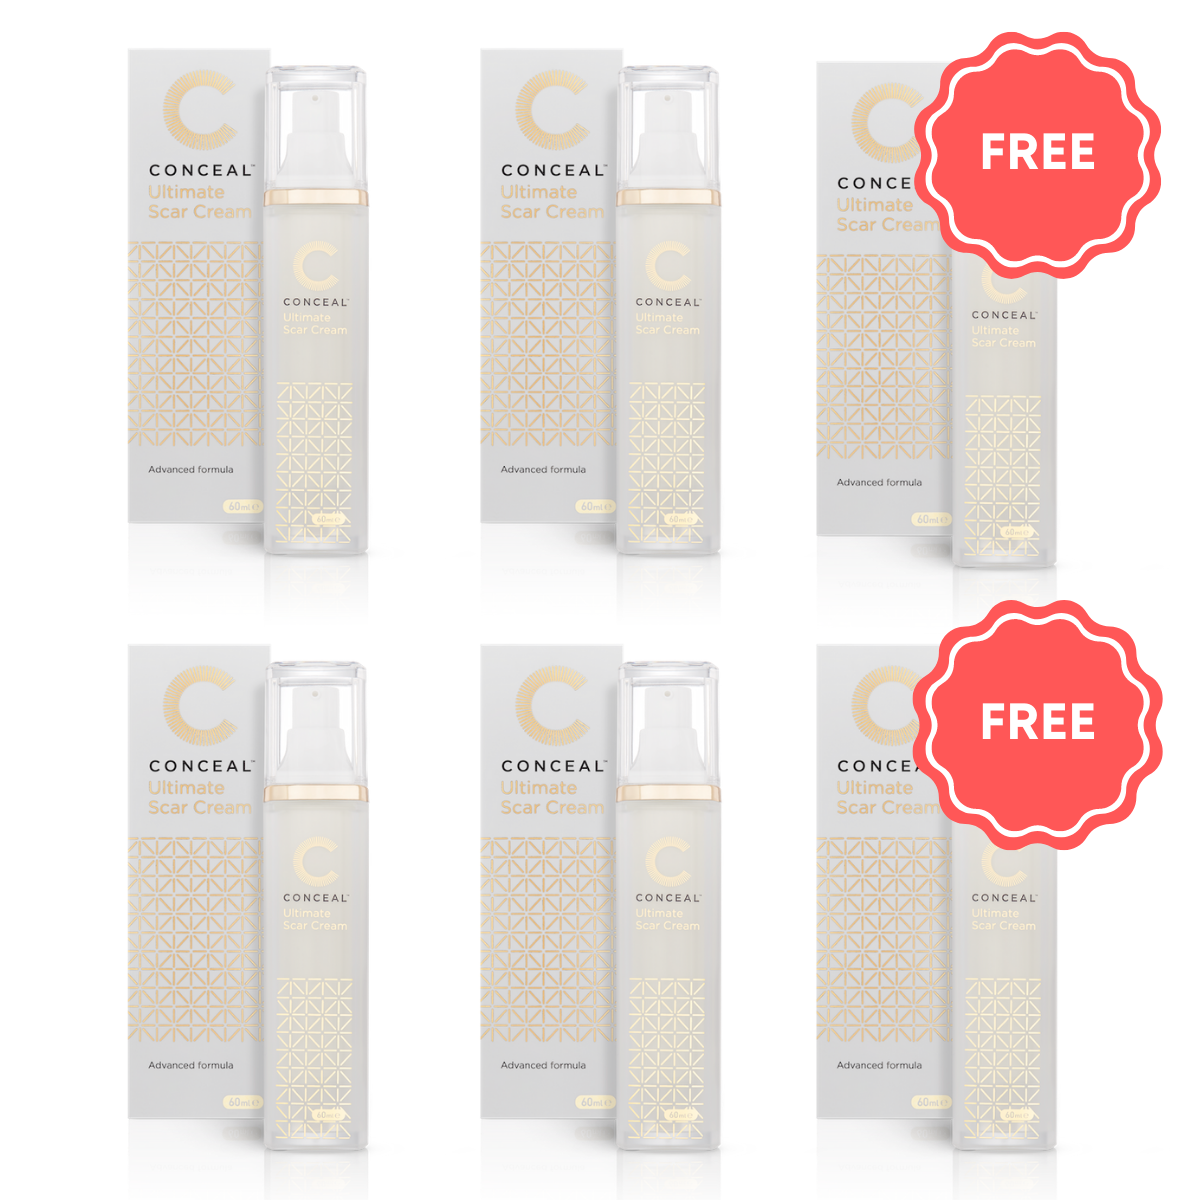 Conceal Ultimate Scar Cream™ - Buy 4 Get 2 Free!